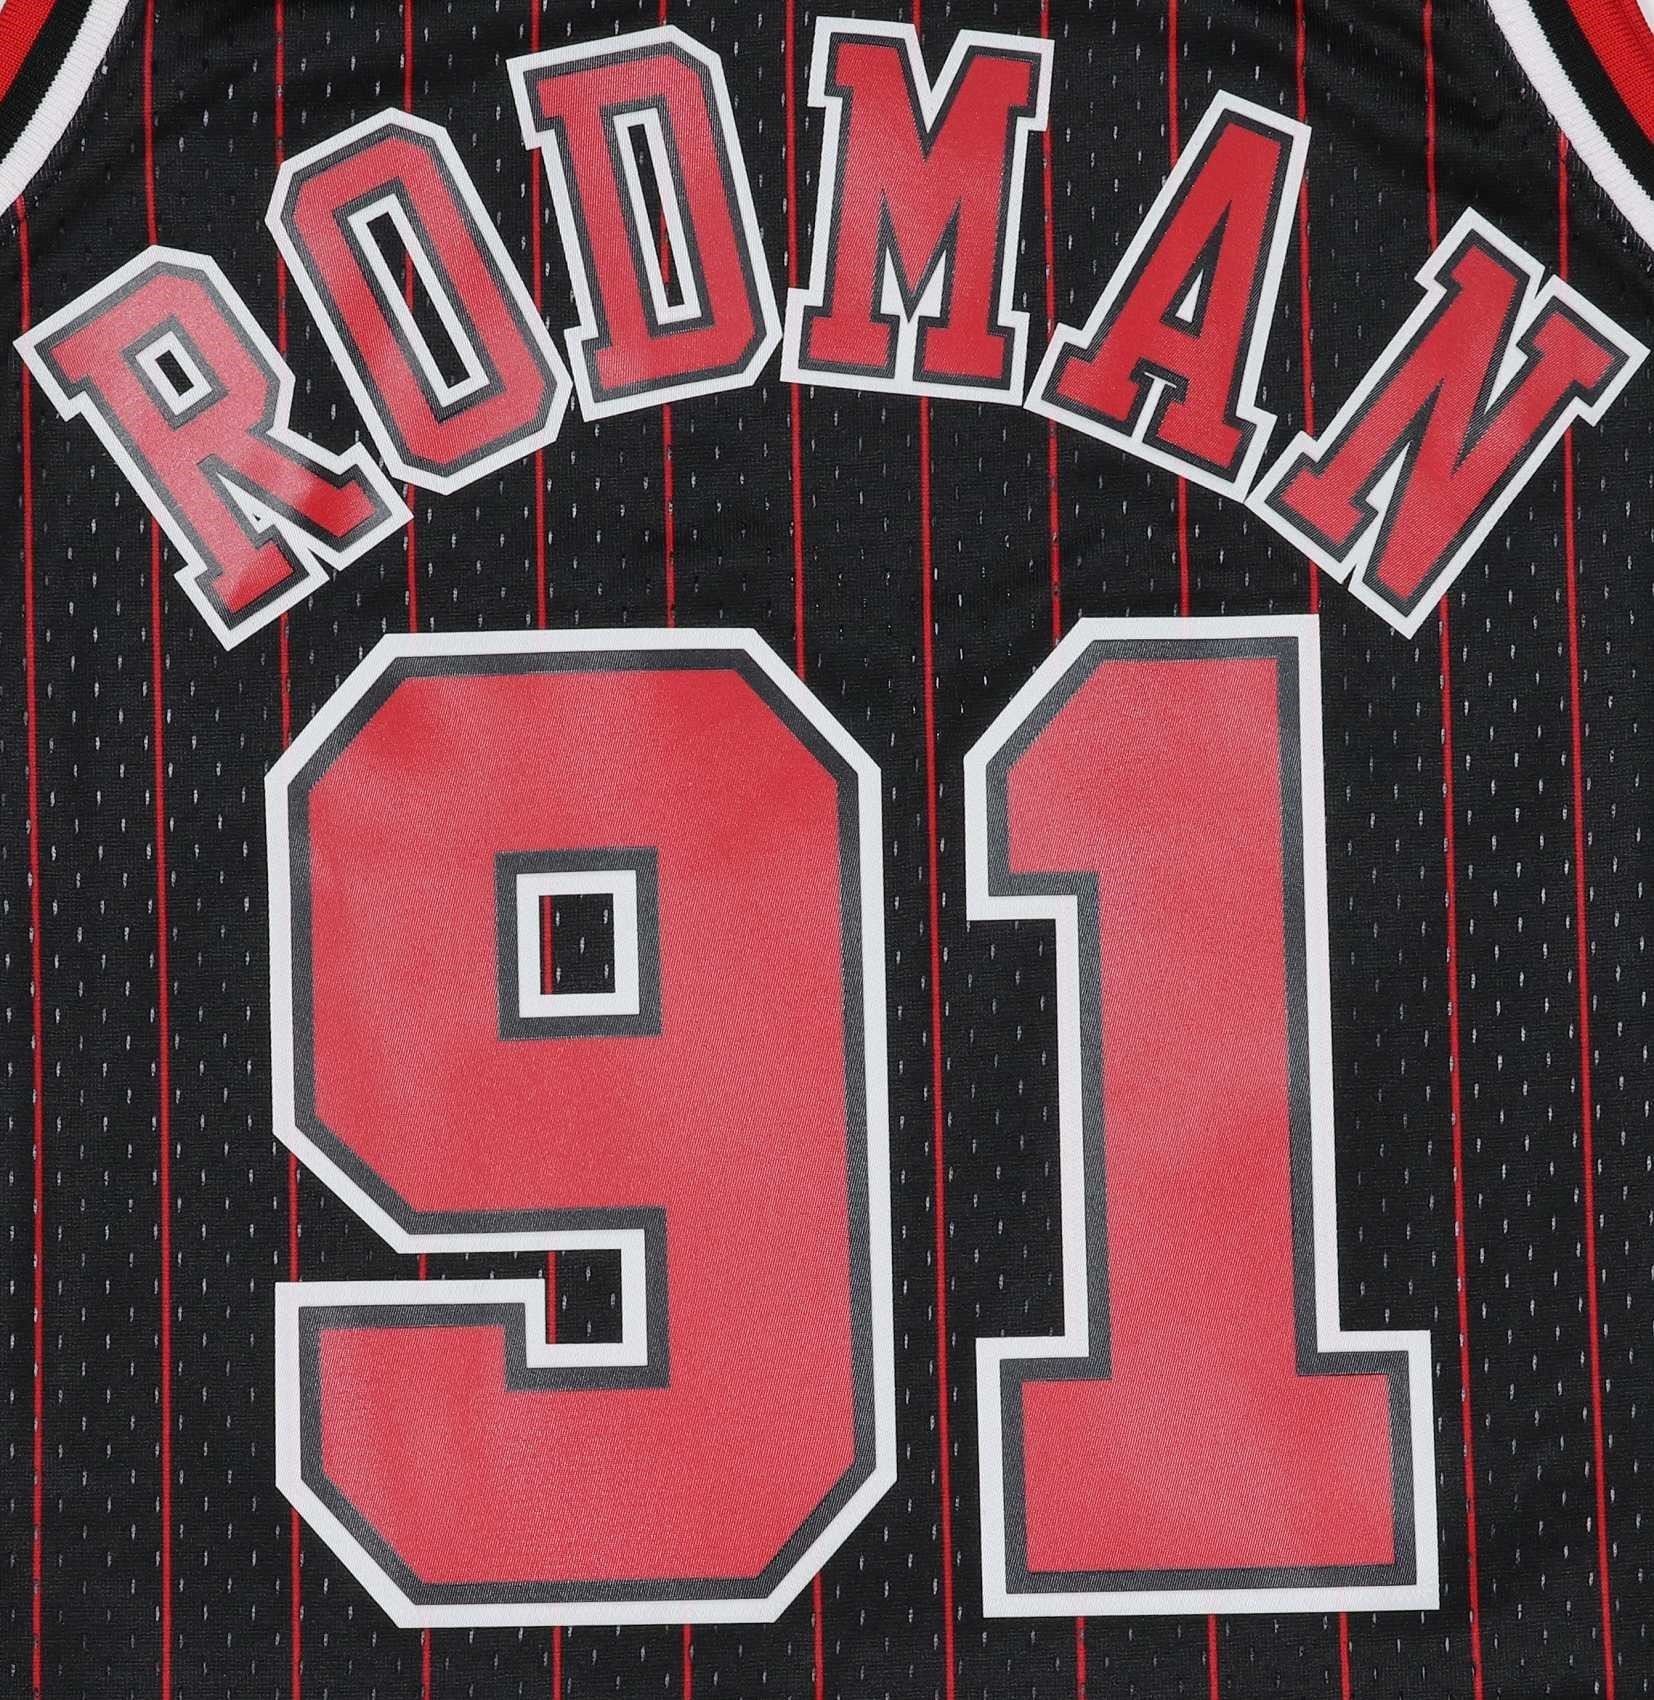 Dennis Rodman #91 Chicago Bulls NBA Kids Swingman Alternate Jersey Mitchell & Ness